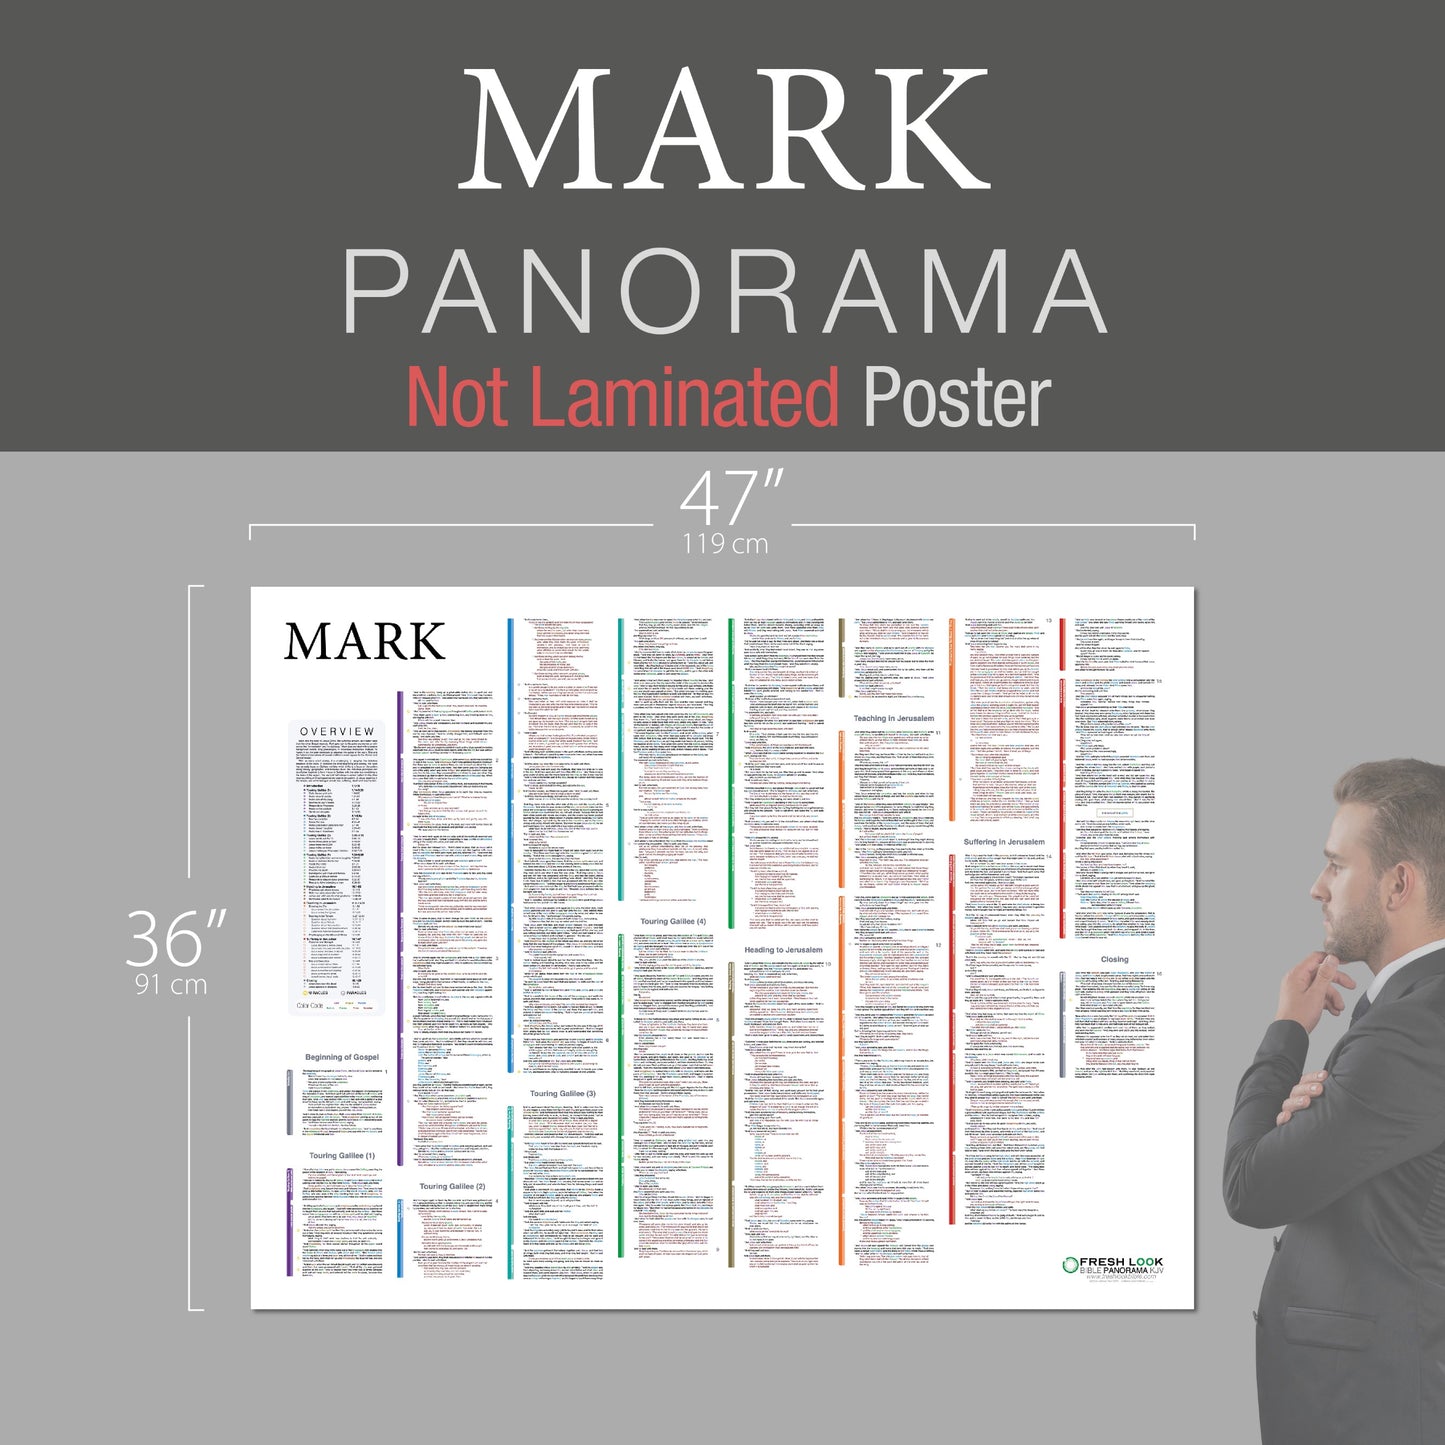 Mark Panorama Not Laminated